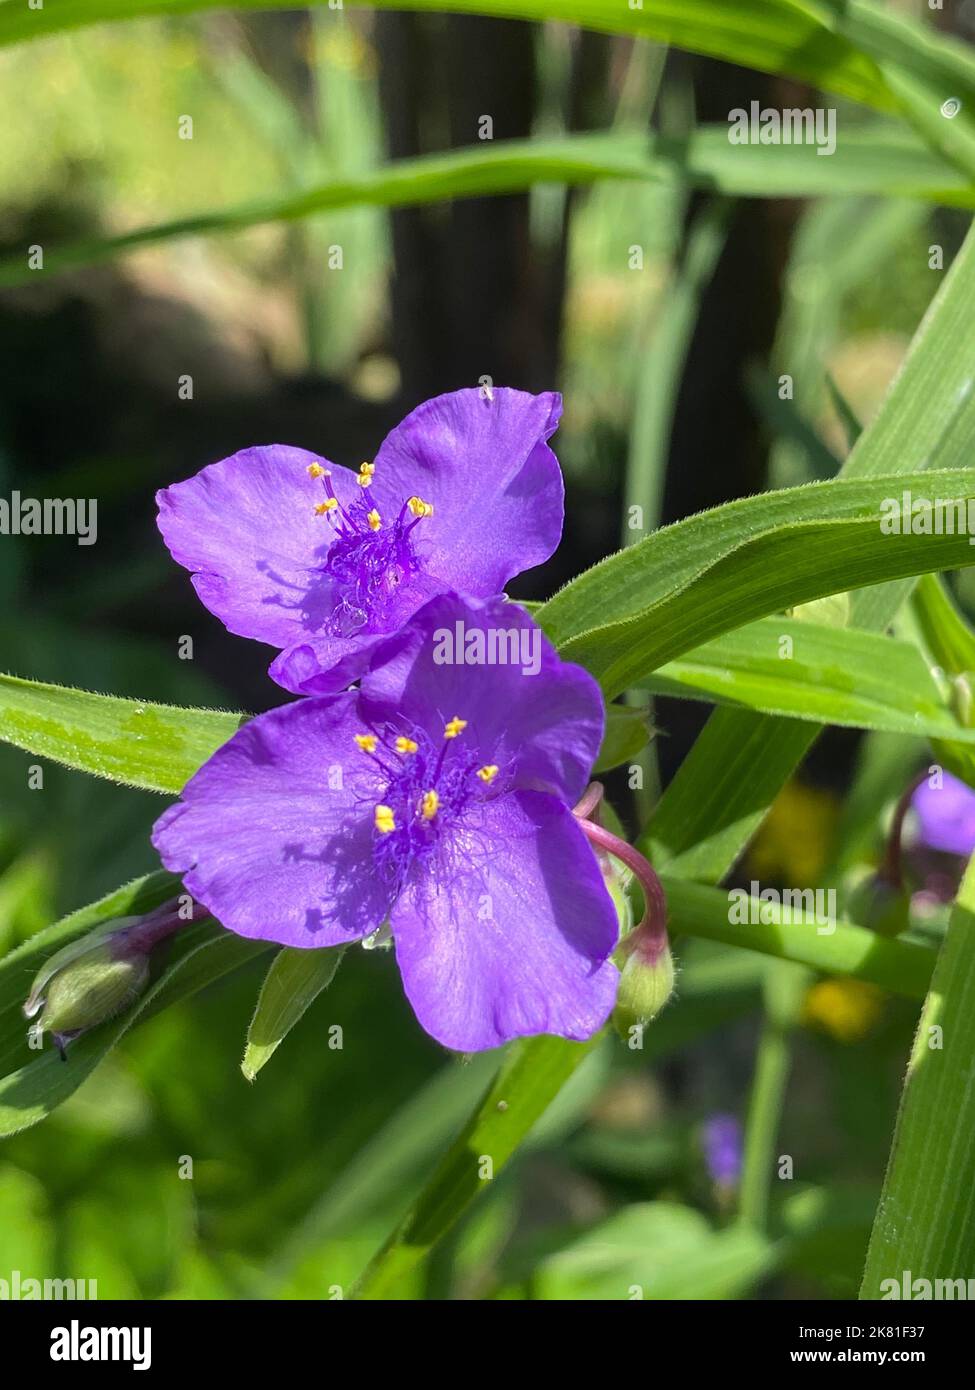 A vertical shot of a purple Tradescantia flower plant Stock Photo